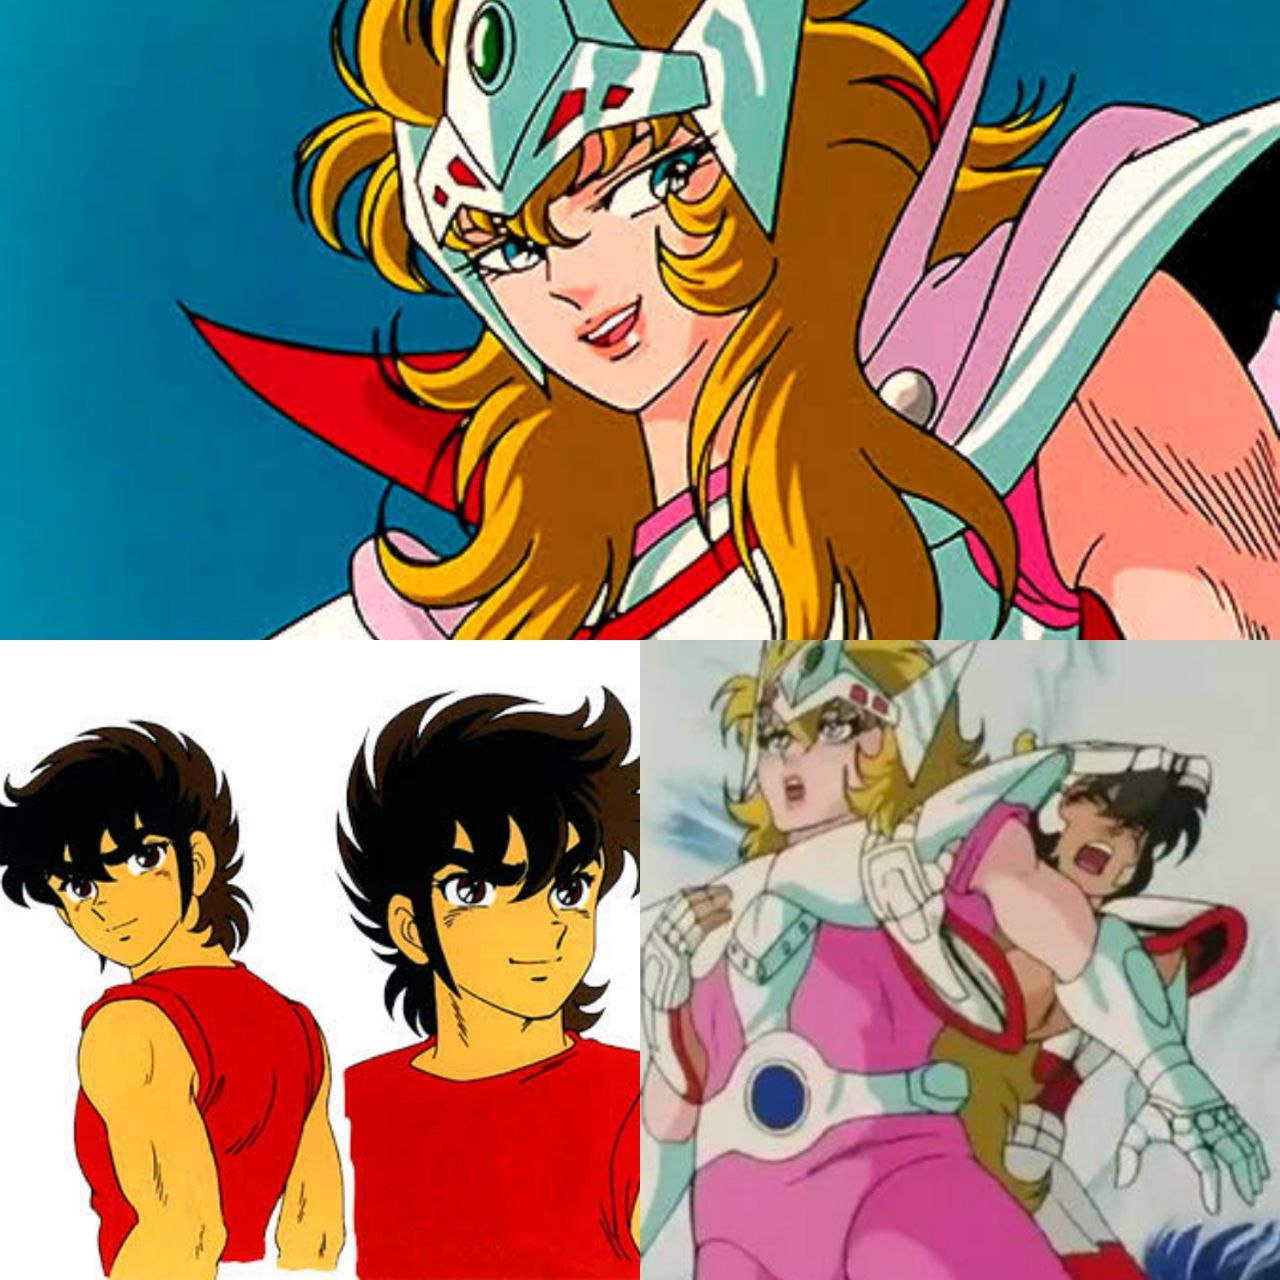 Cavaleiros do Zodíaco: O Sailor Moon para gays discretos